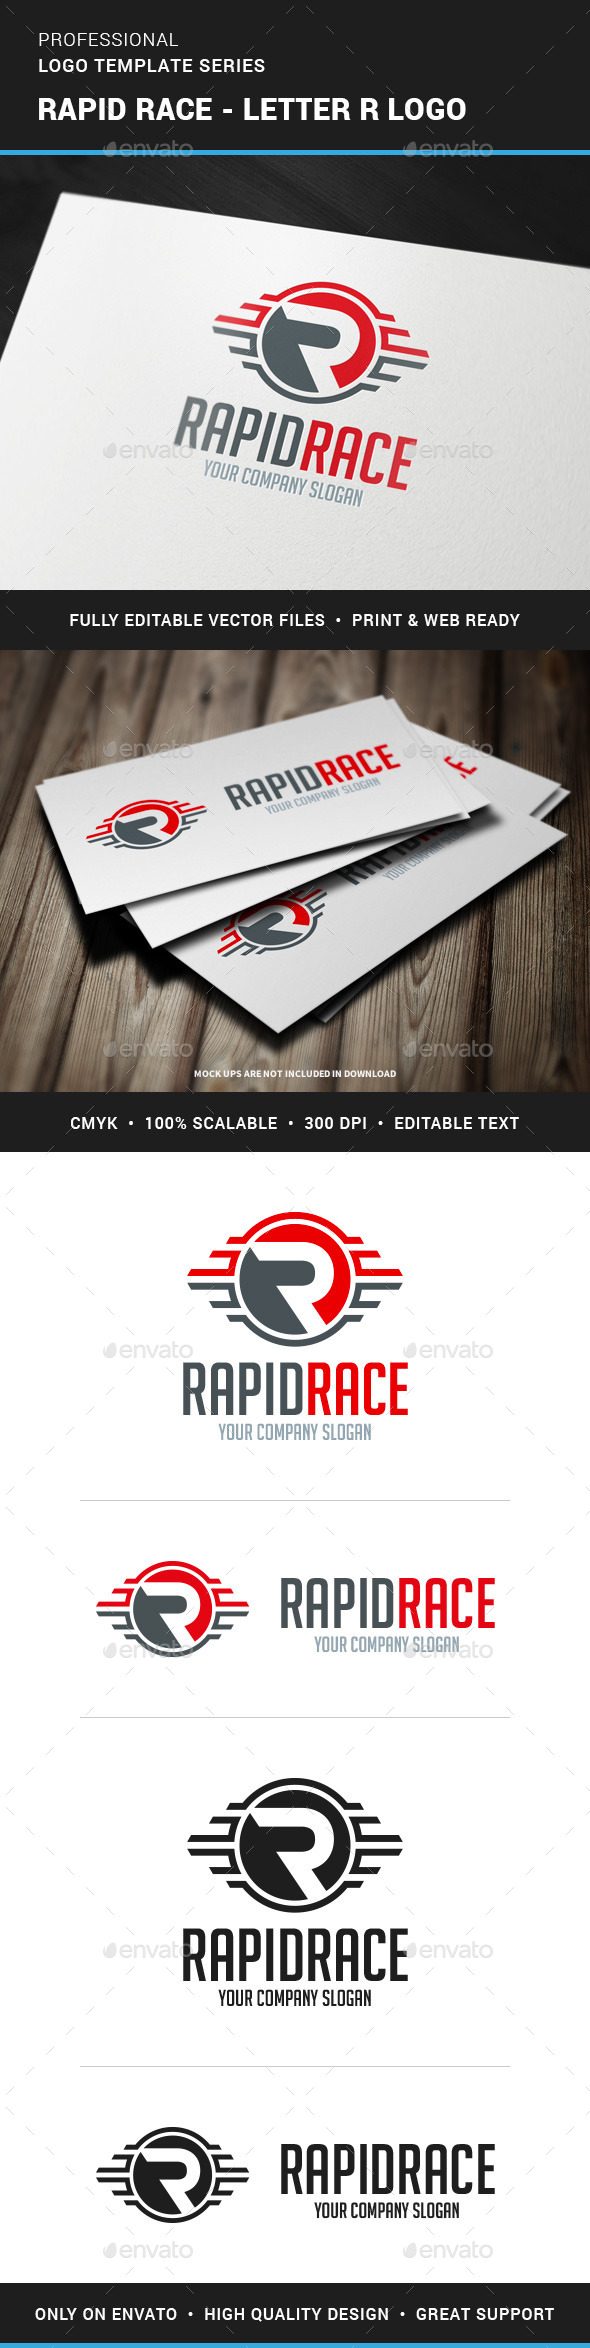 Rapid Race - Letter R Logo